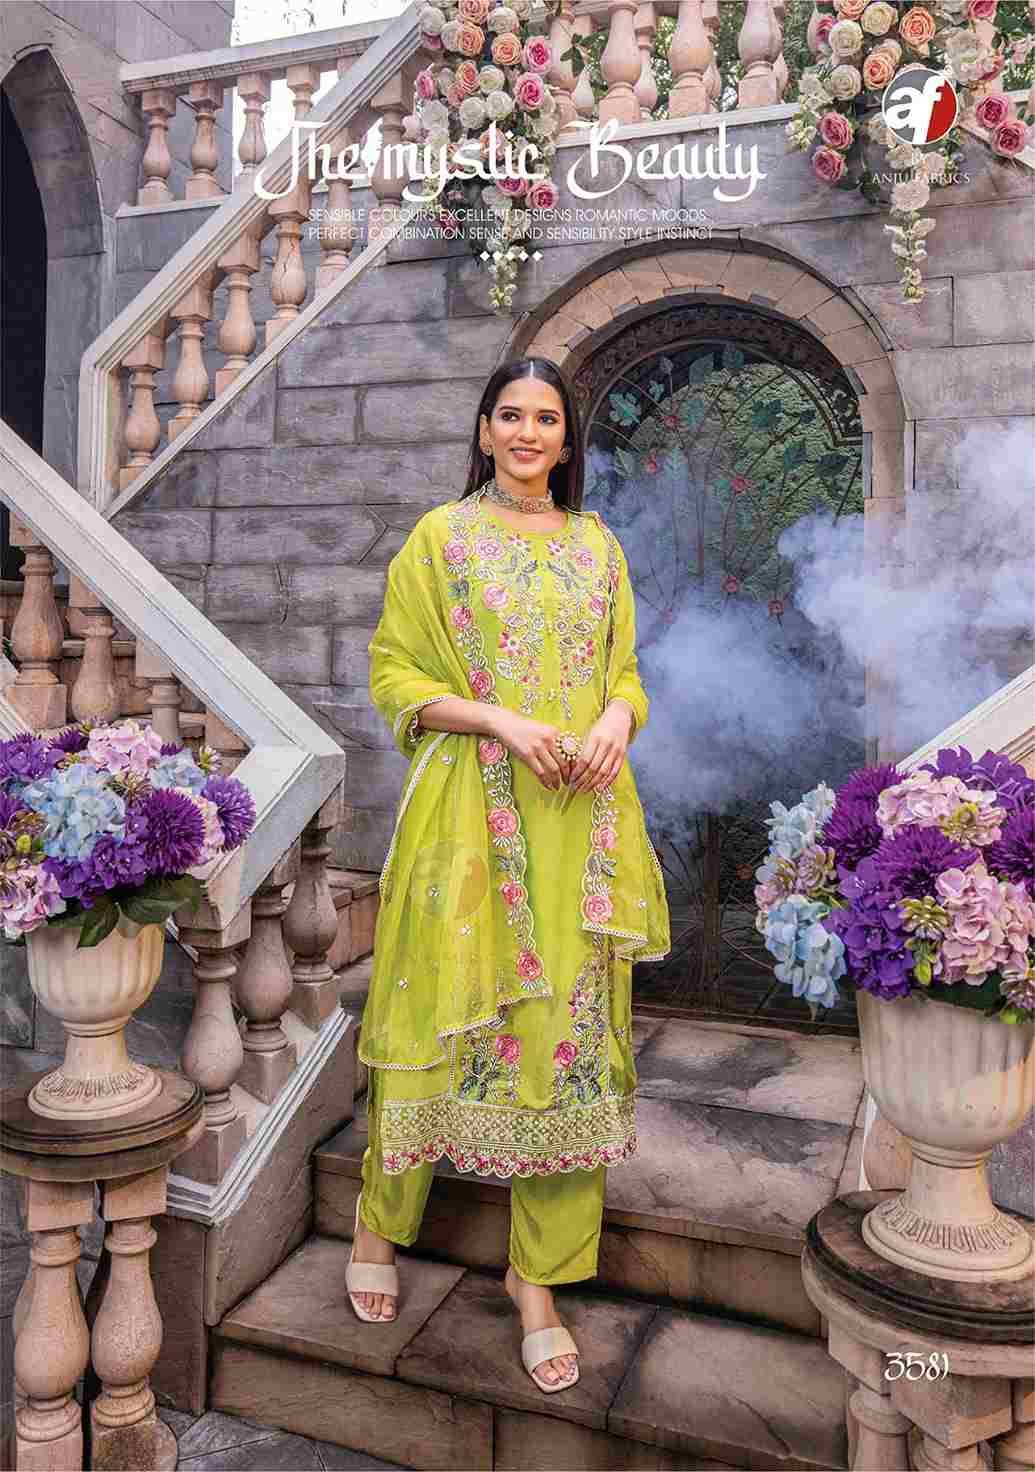 Sayara By Anju Fabrics 3581 To 3585 Series Beautiful Festive Suits Colorful Stylish Fancy Casual Wear & Ethnic Wear Pure Muslin Dresses At Wholesale Price